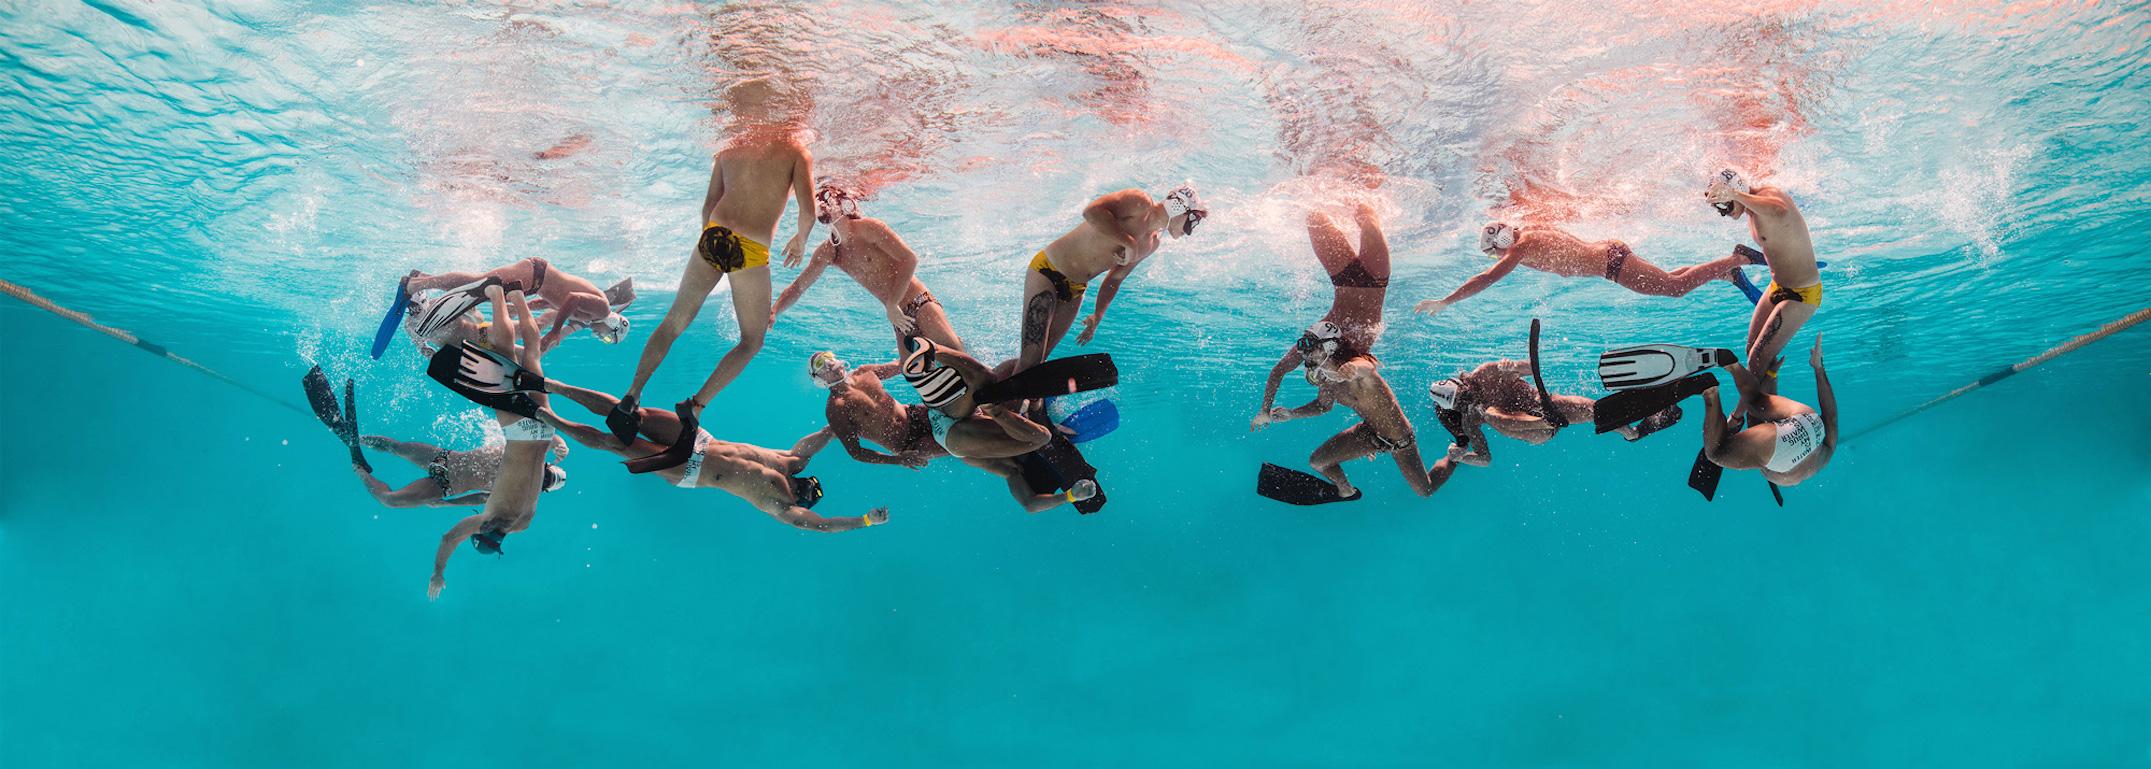 Mario Arroyave  Figurative Photograph - Timeline Underwater Rugby II